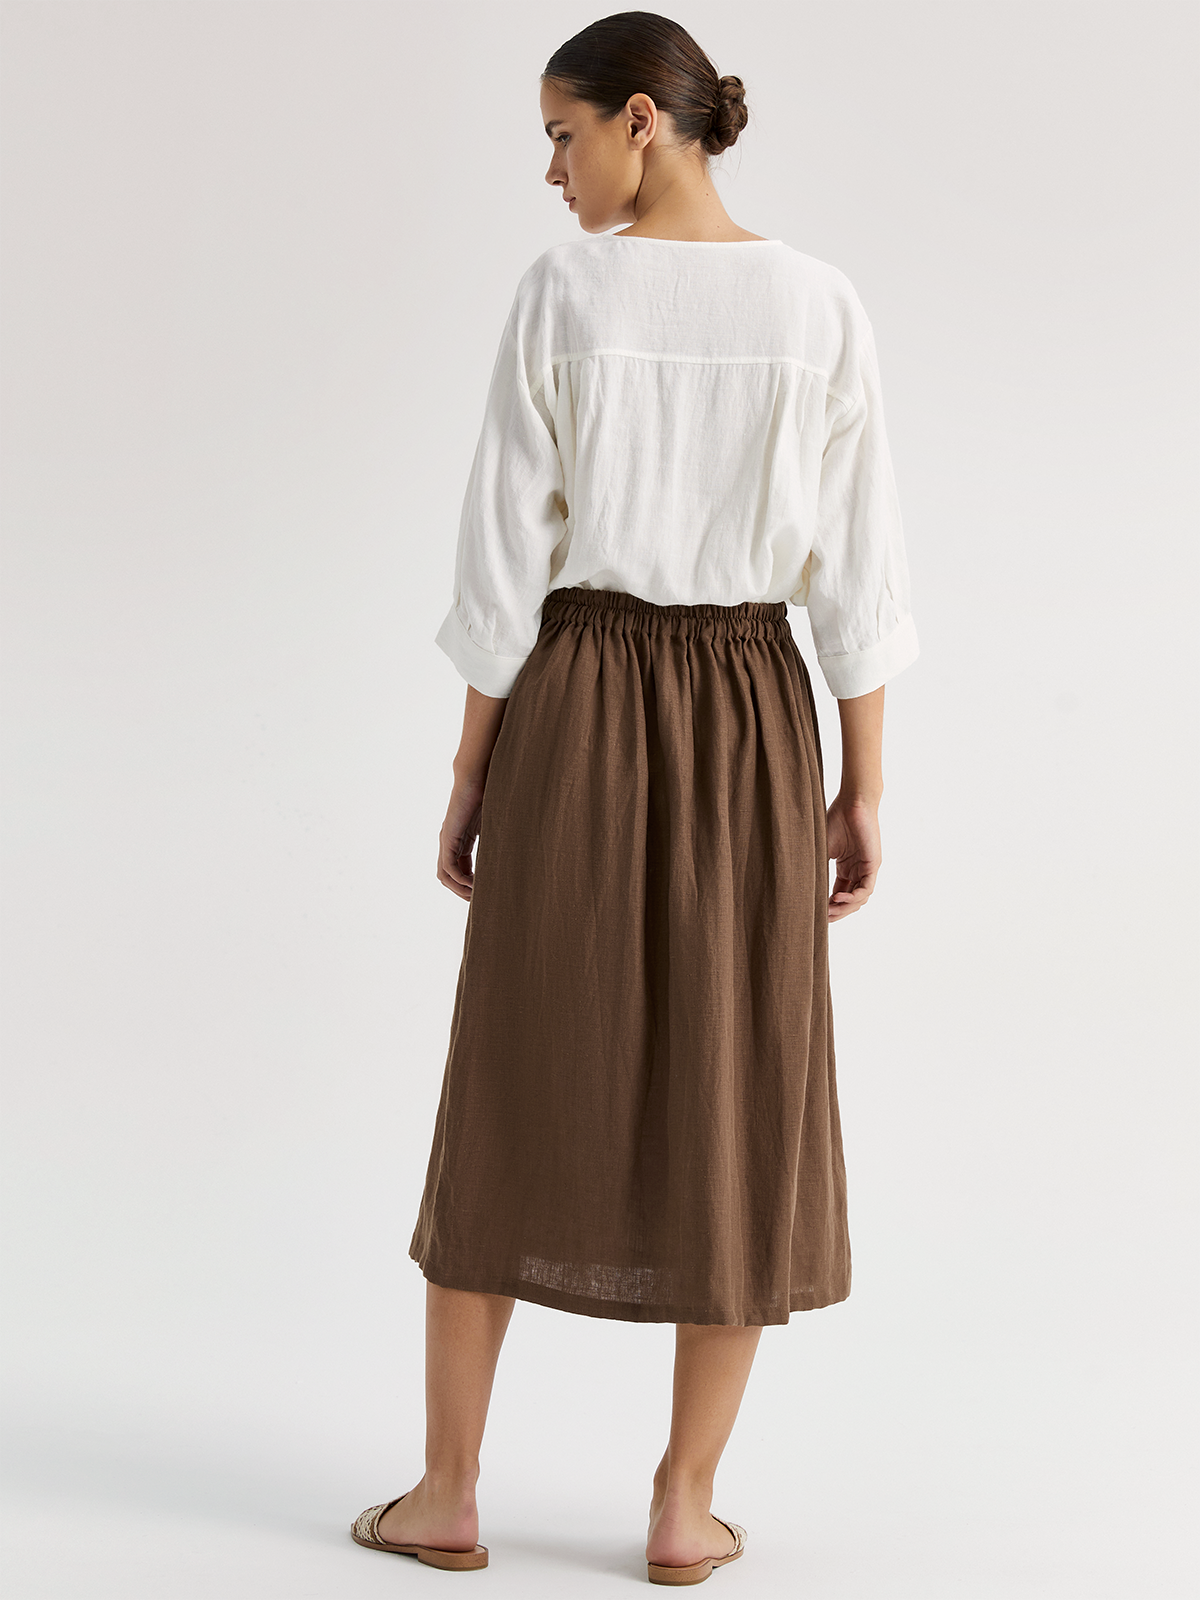 Gaia 100% European Linen Skirt